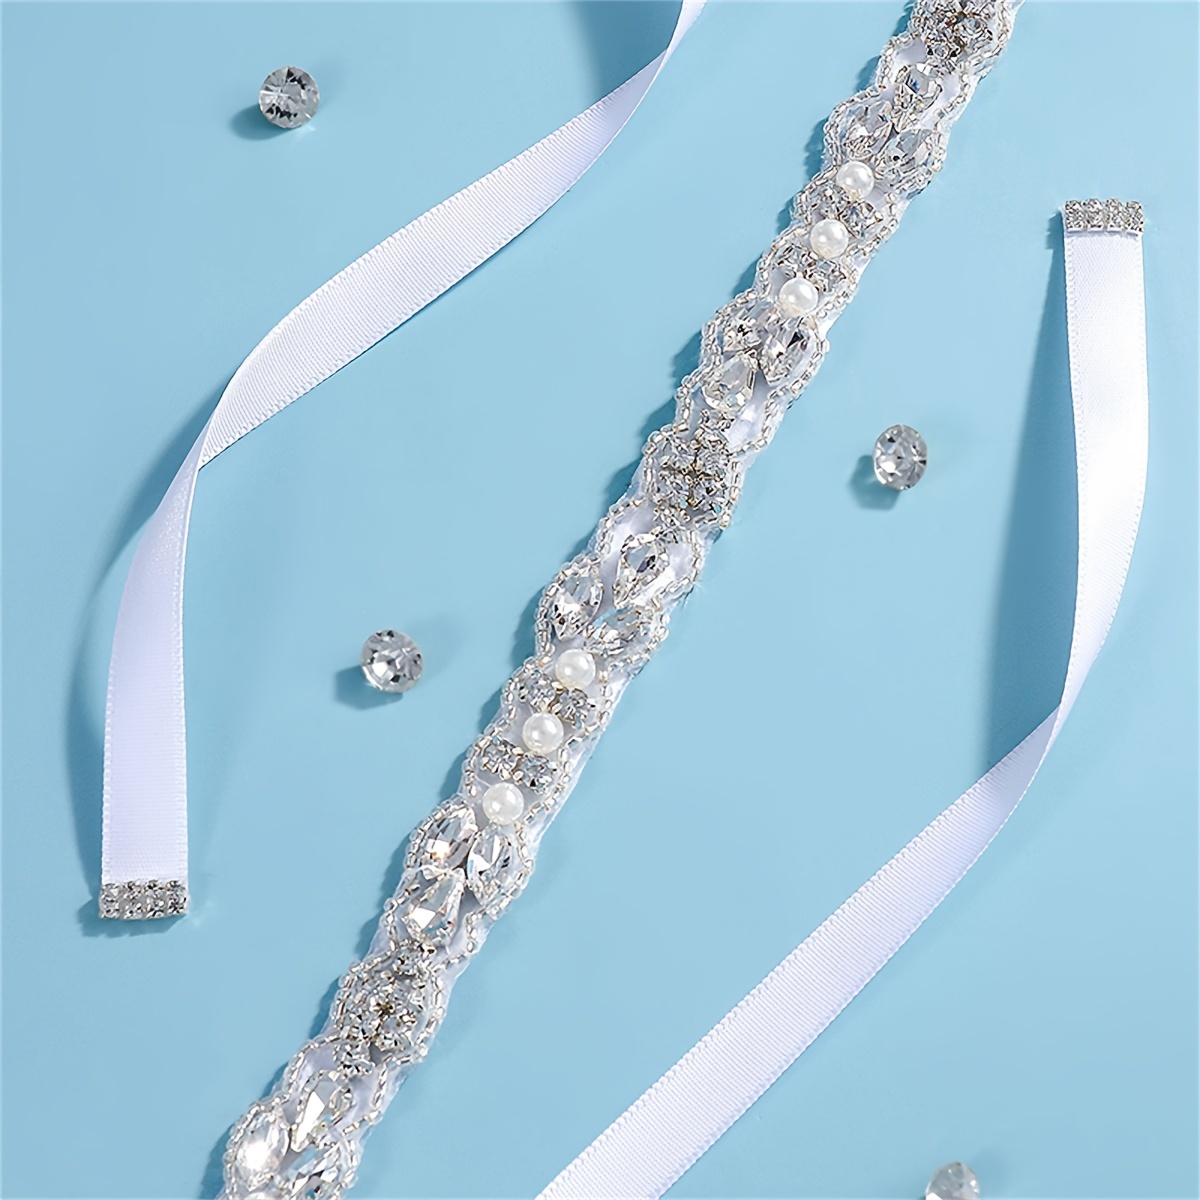 yanstar Rhinestone Bridal Belt Wedding Sash Belt Handmade Crystal Beads  Wedding Dress Belt